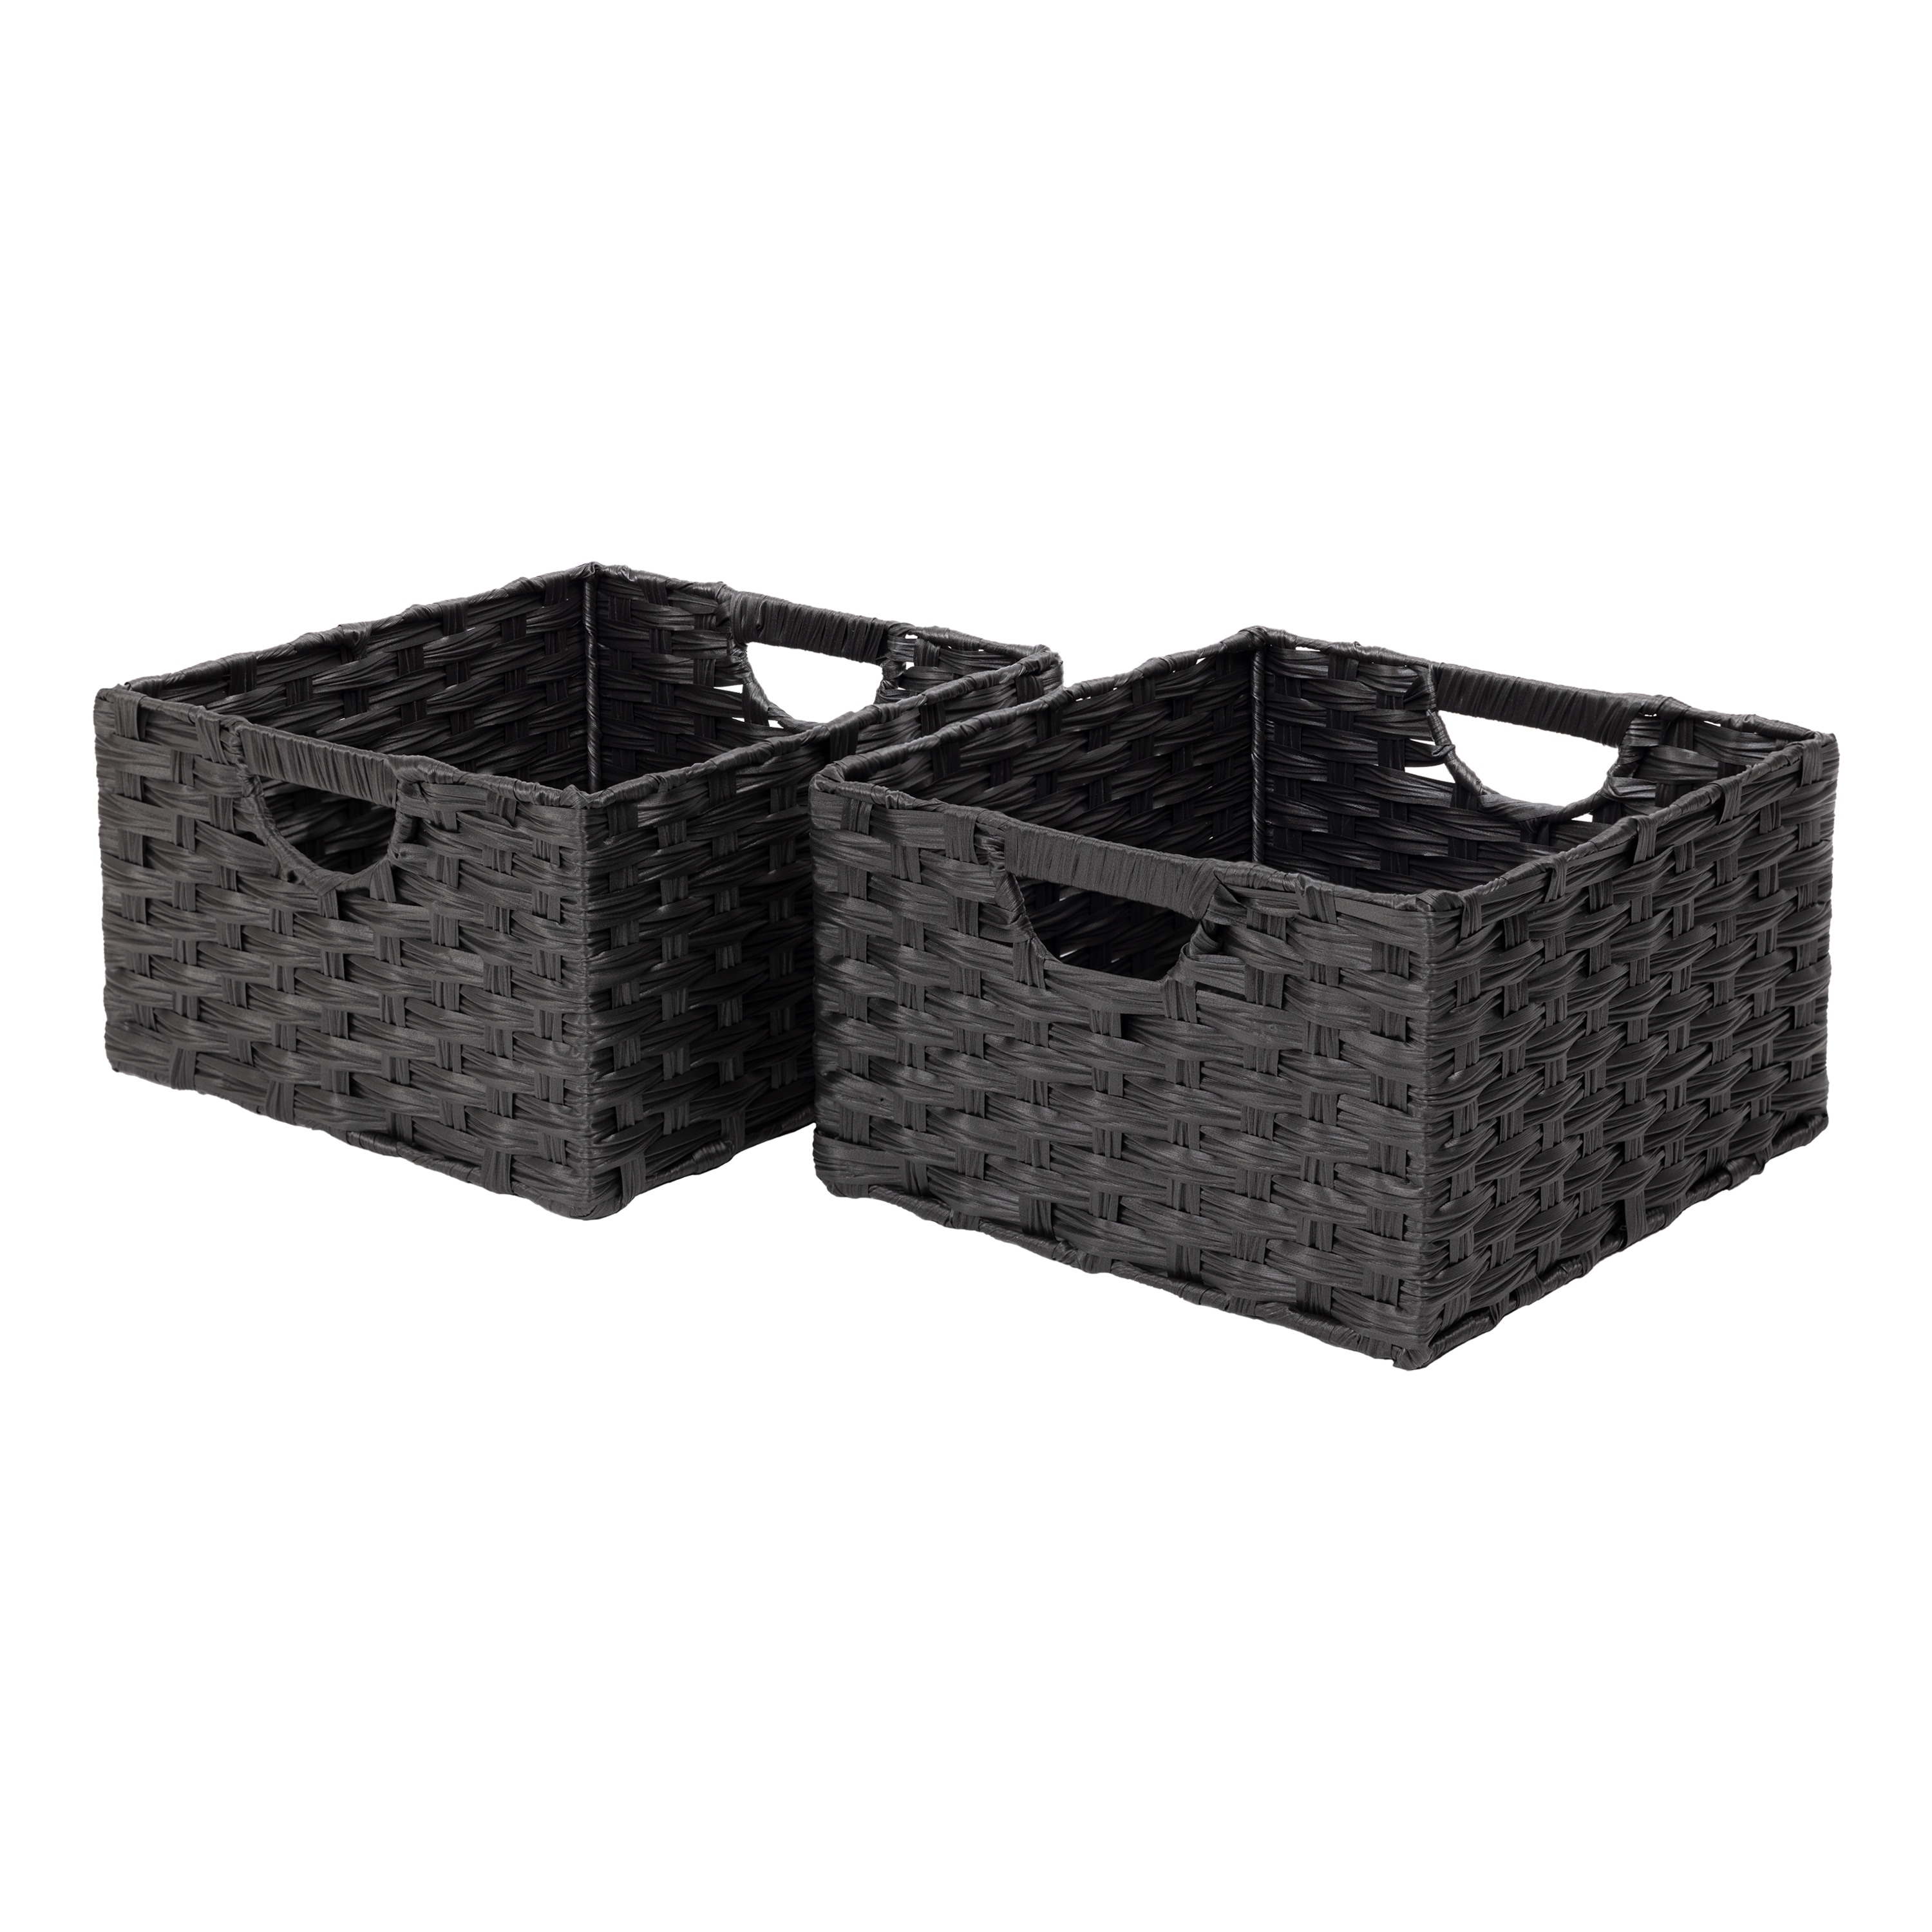 https://ak1.ostkcdn.com/images/products/is/images/direct/ef36ec5ec4fad809ccd2a3241b81074e4319758d/Seville-Classics-Foldable-Handwoven-Cube-Storage-Basket-%282-Pack%29.jpg